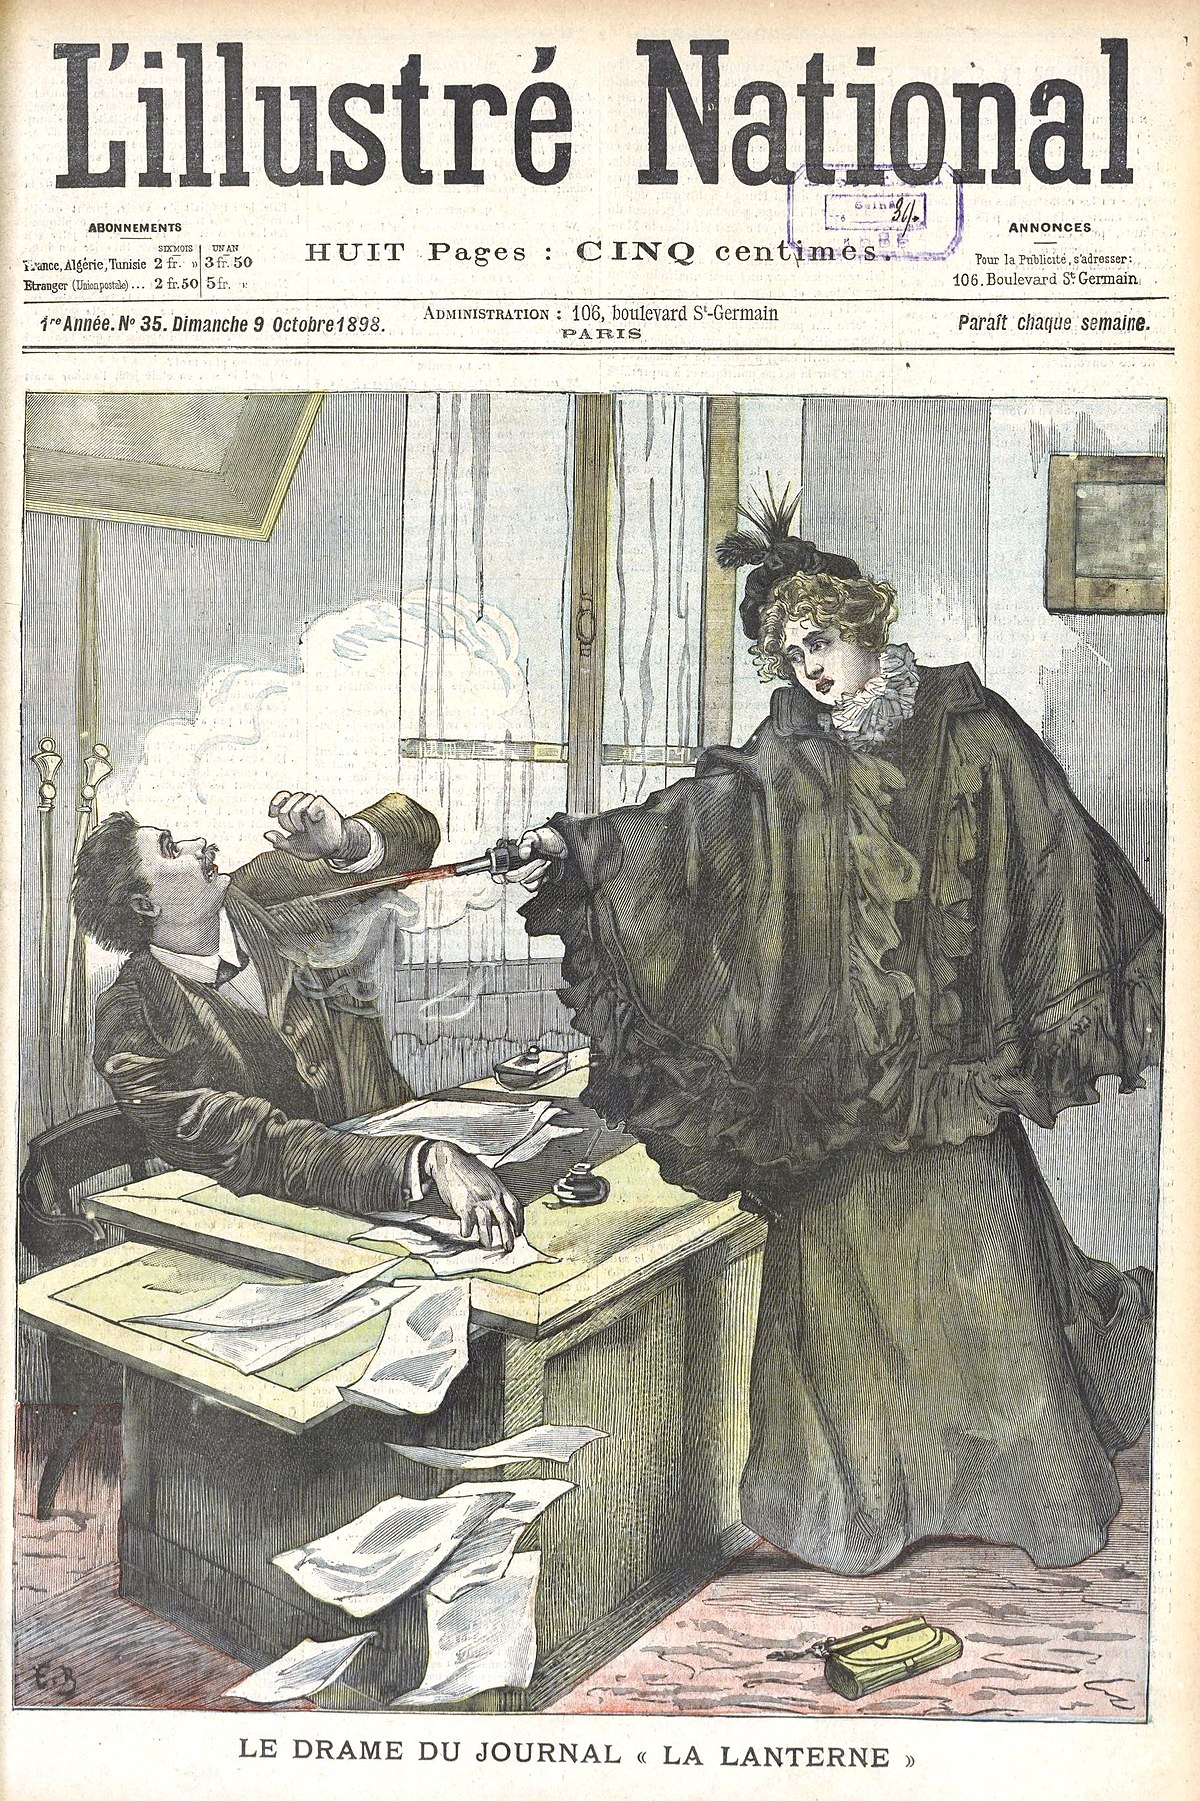 File:Drame du journal Lanterne 1898-10-09).jpeg - Wikimedia Commons